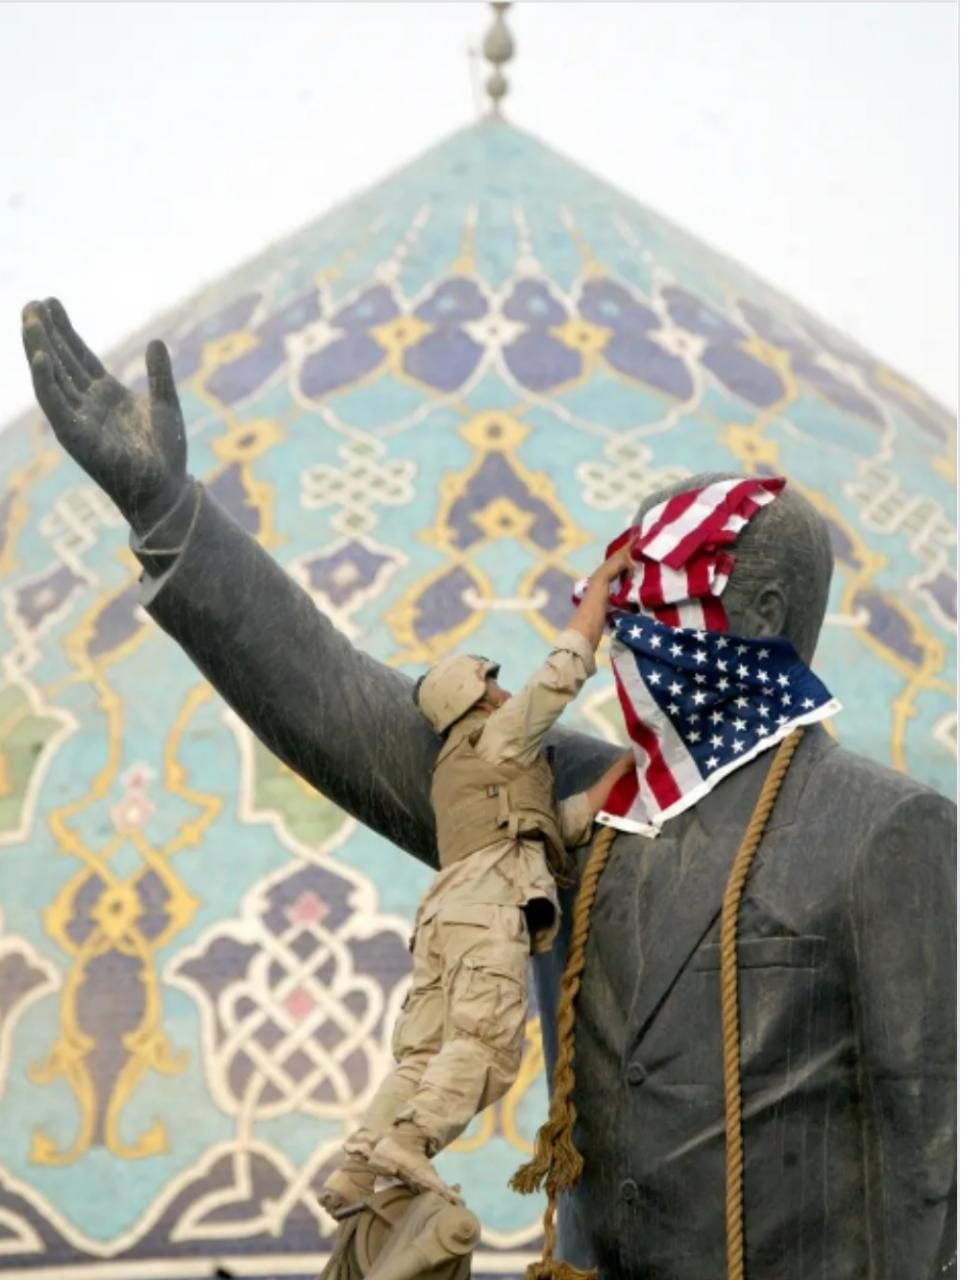 تمثال صدام حسين